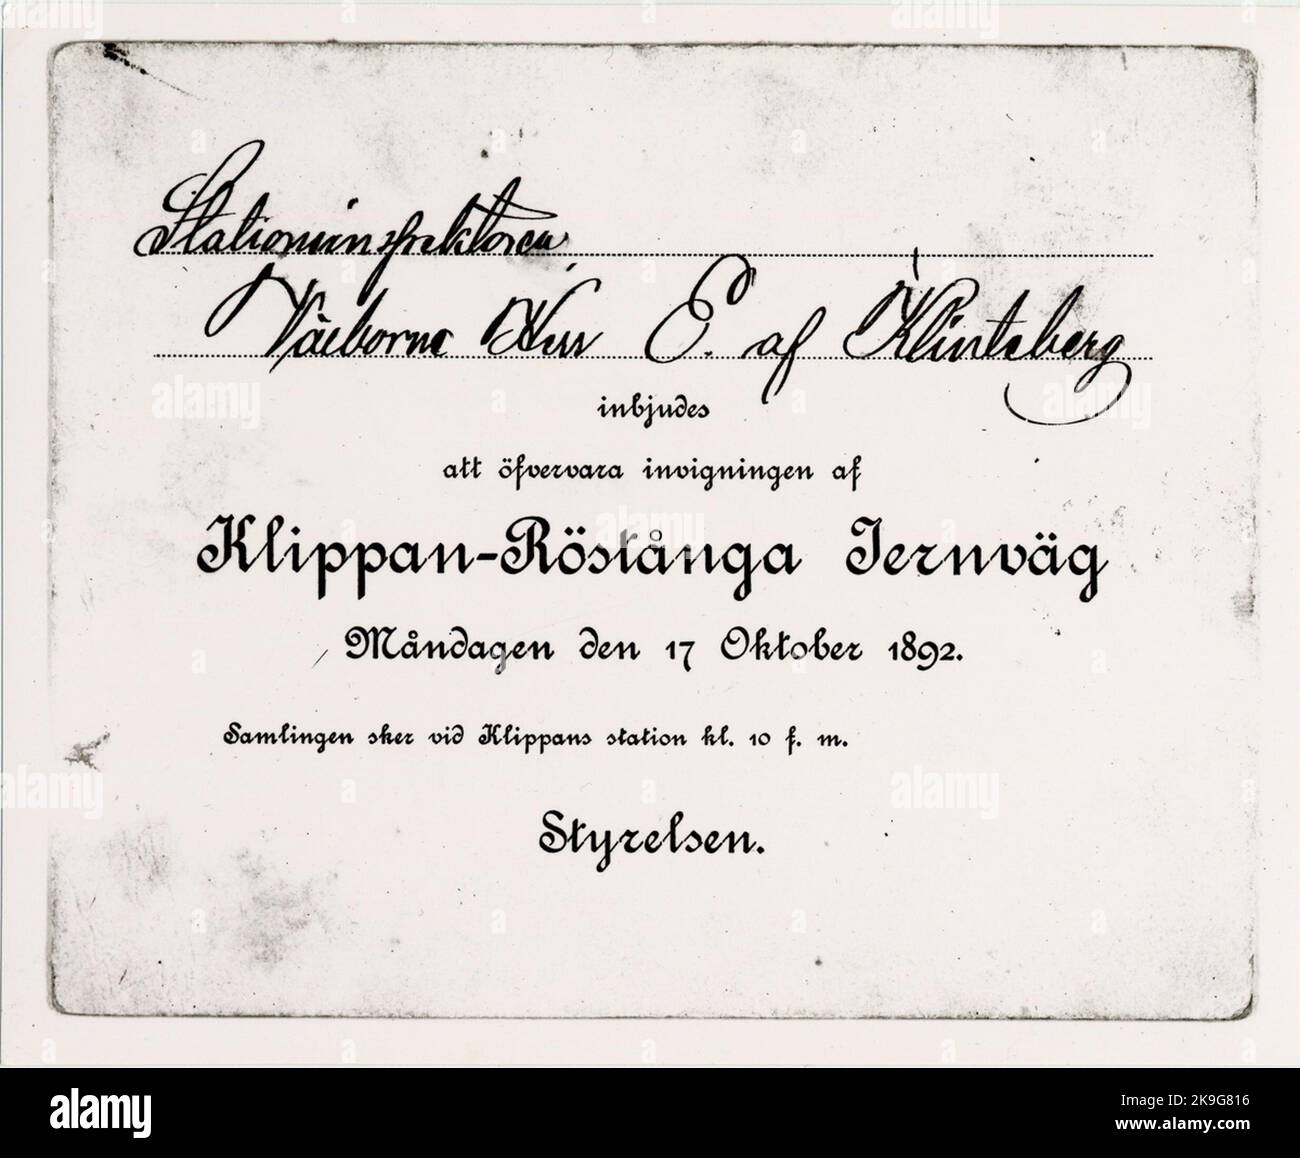 Invitation cards for Klippan-voting Railway inauguration. Stock Photo